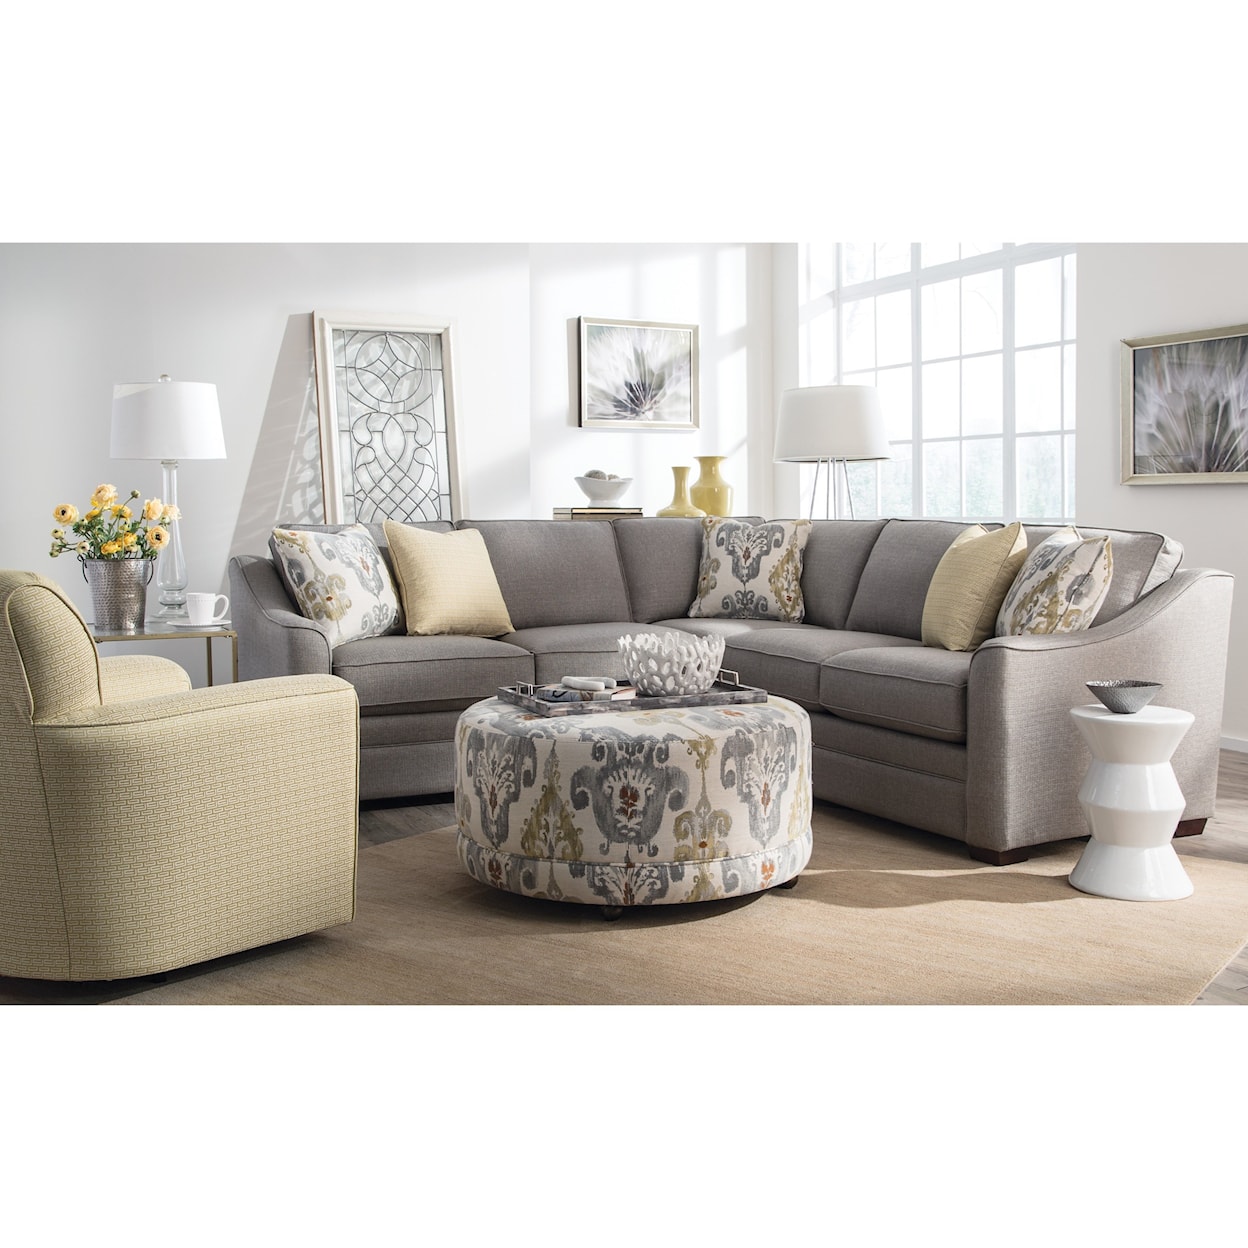 Craftmaster F9 Design Options Living Room Group